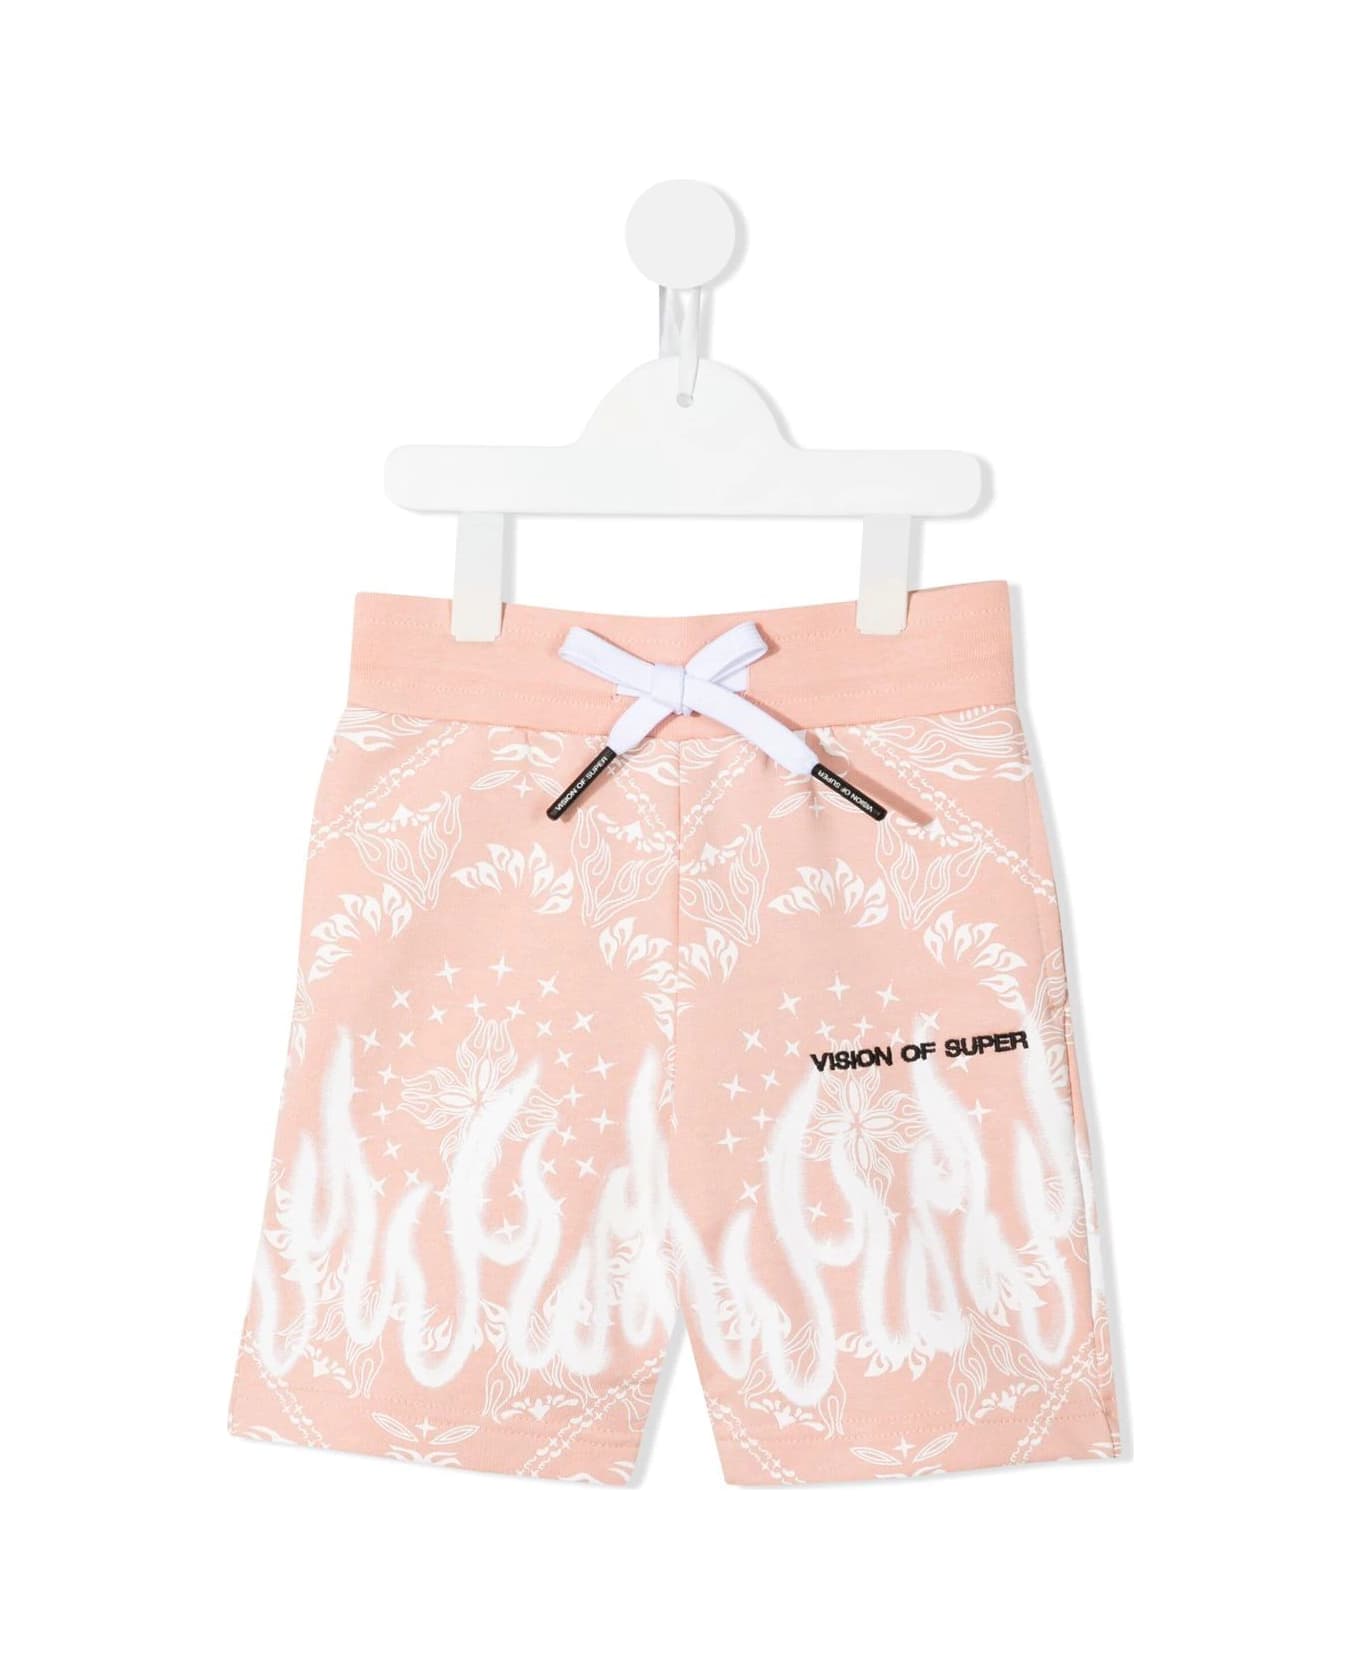 Vision of Super Kids Pink Sports Shorts With Bandana Print - Pink